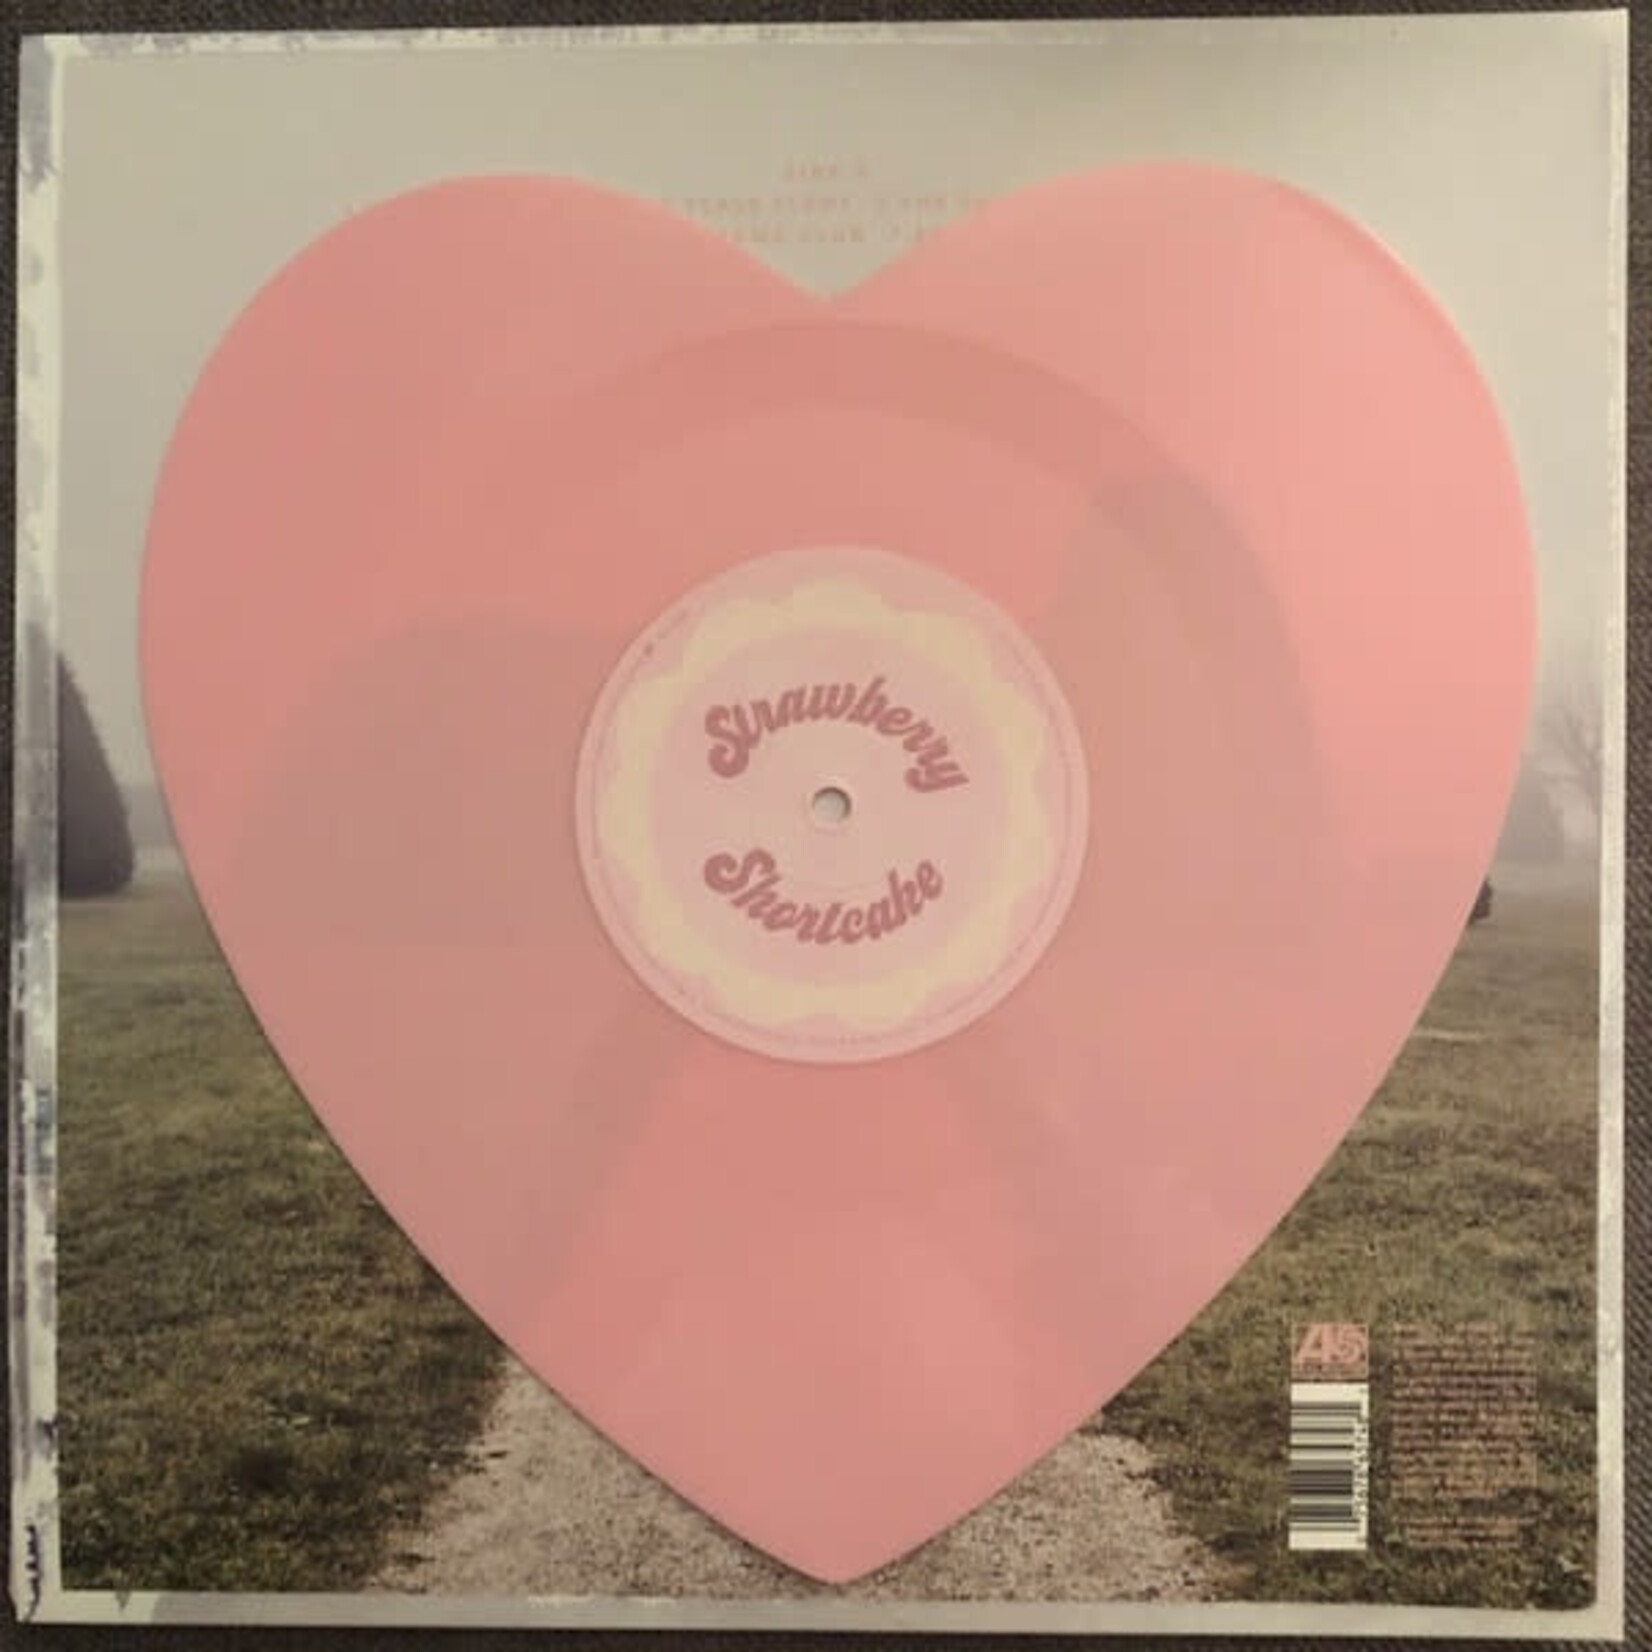 Martinez, Melanie: K-12 (Ltd Ed Green Mint, w/ Pink Heart 10") [KOLLECTIBLES]